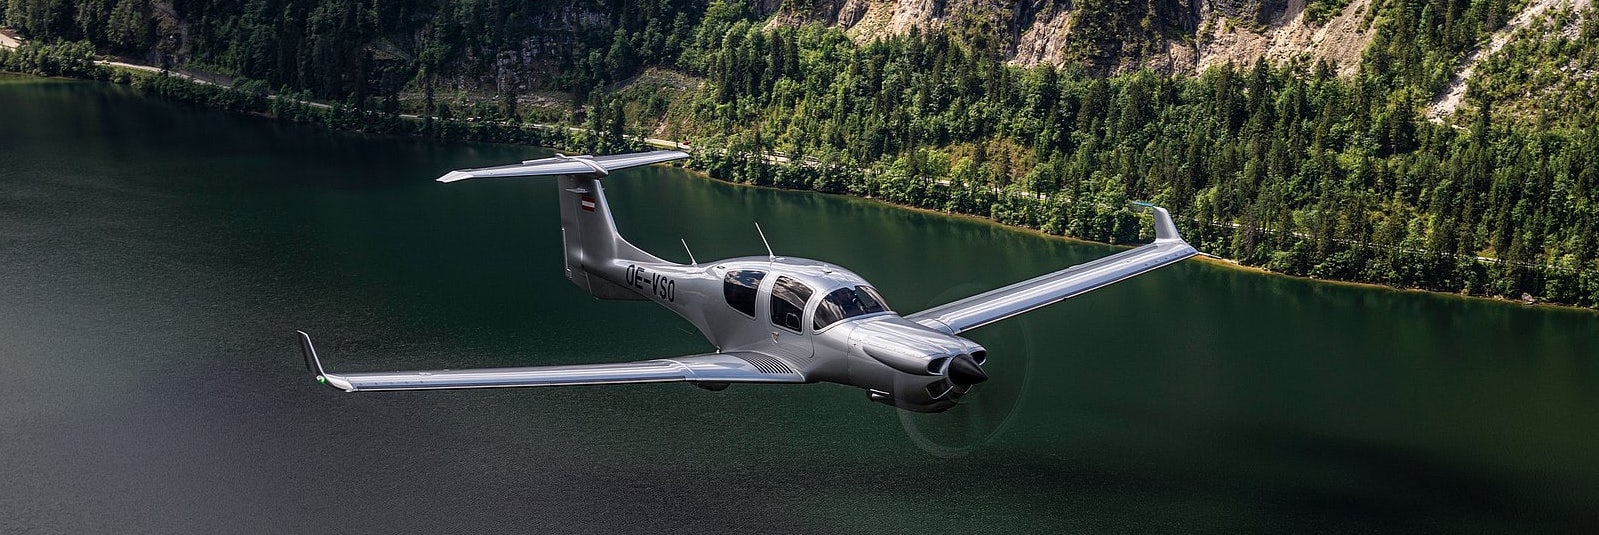 The DA50 RG flying over a lake